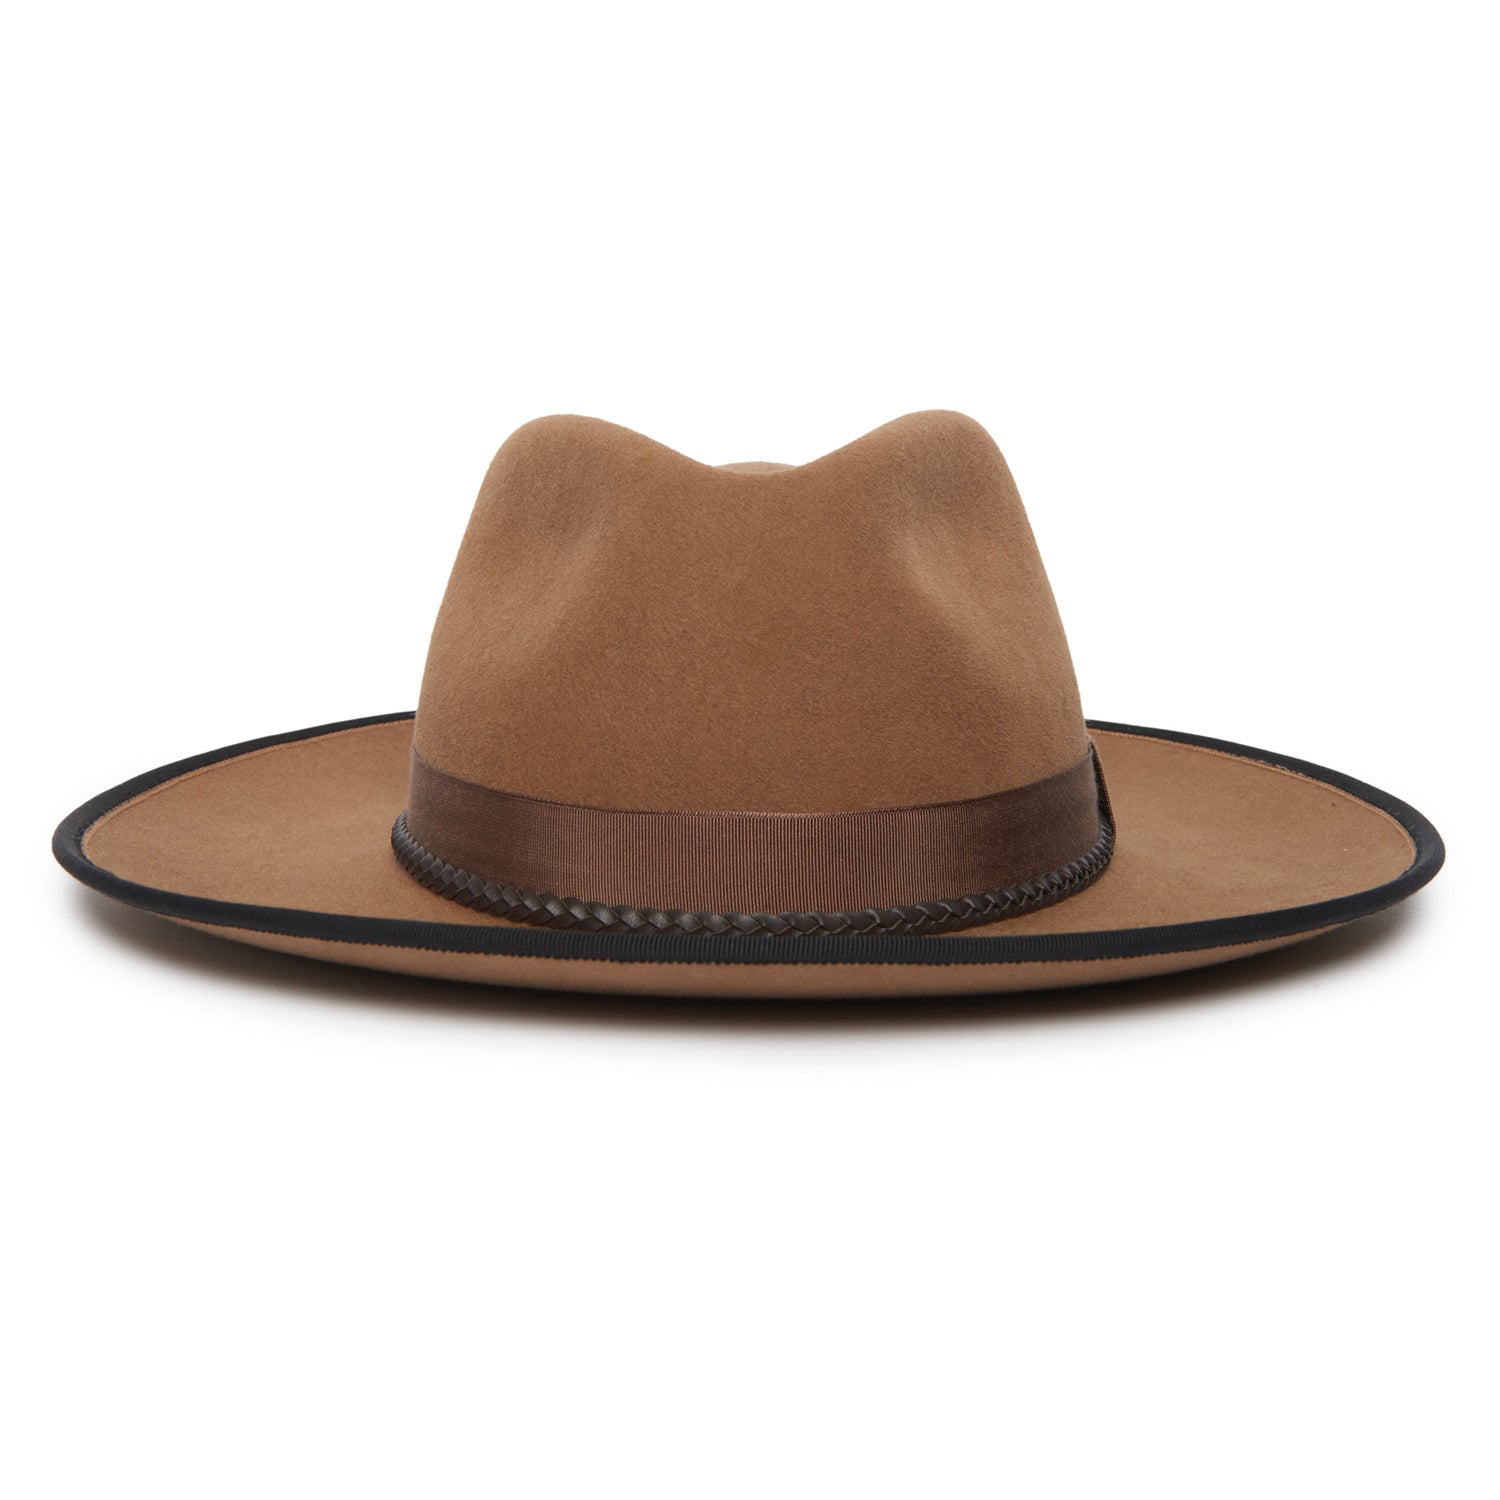 All Fedoras - Felt & Straw Brimmed Hats – Goorin Bros.